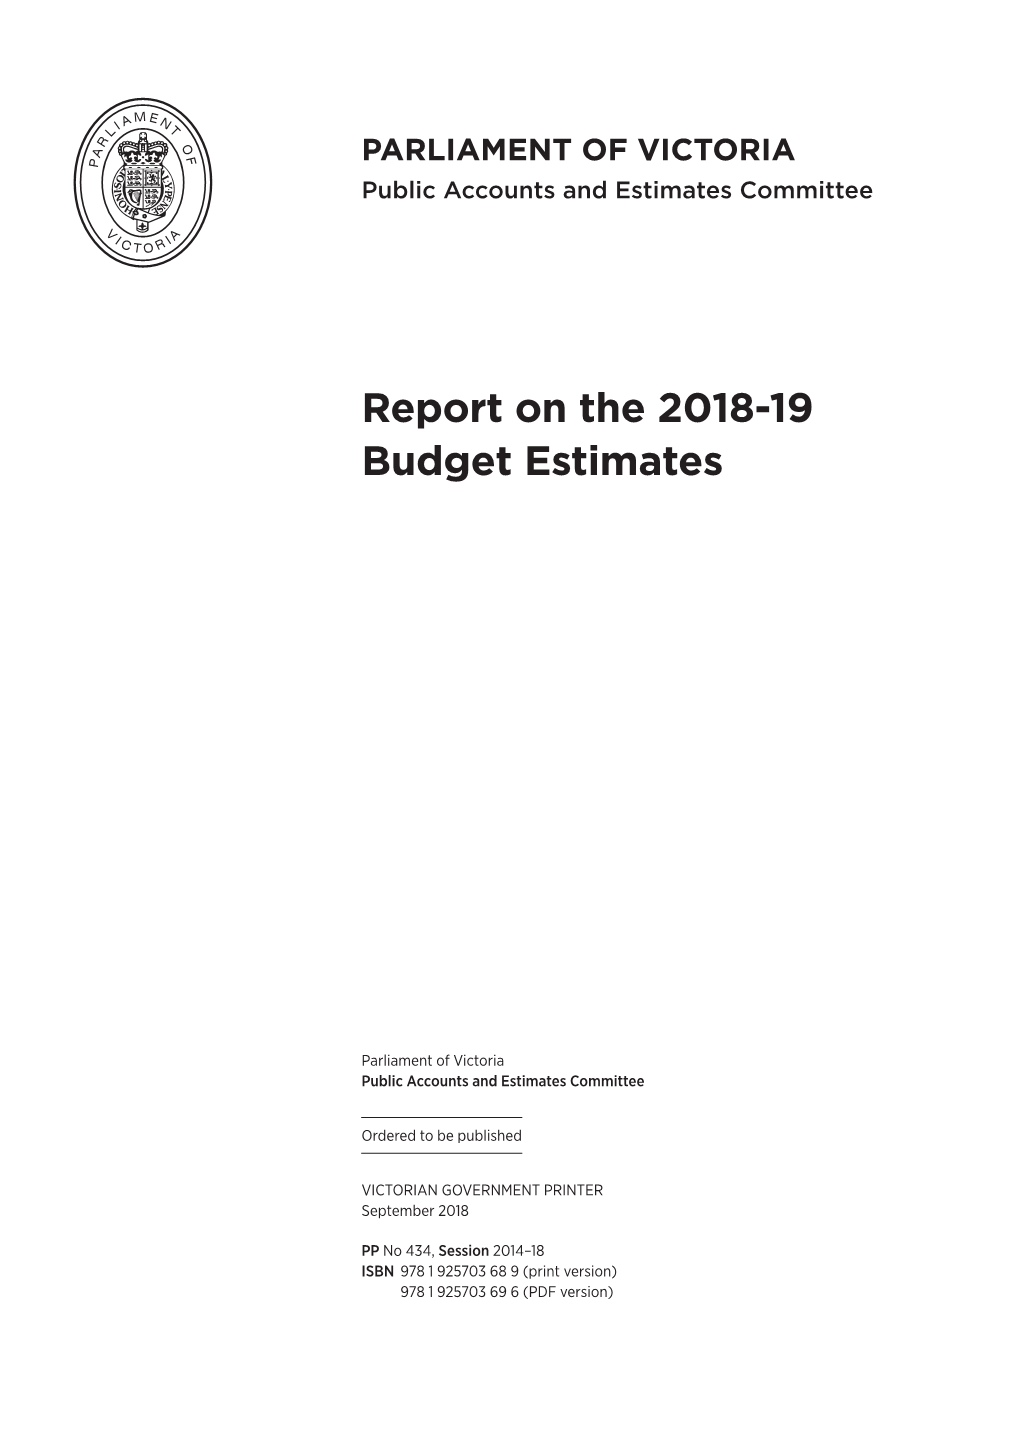 Report on the 2018-19 Budget Estimates